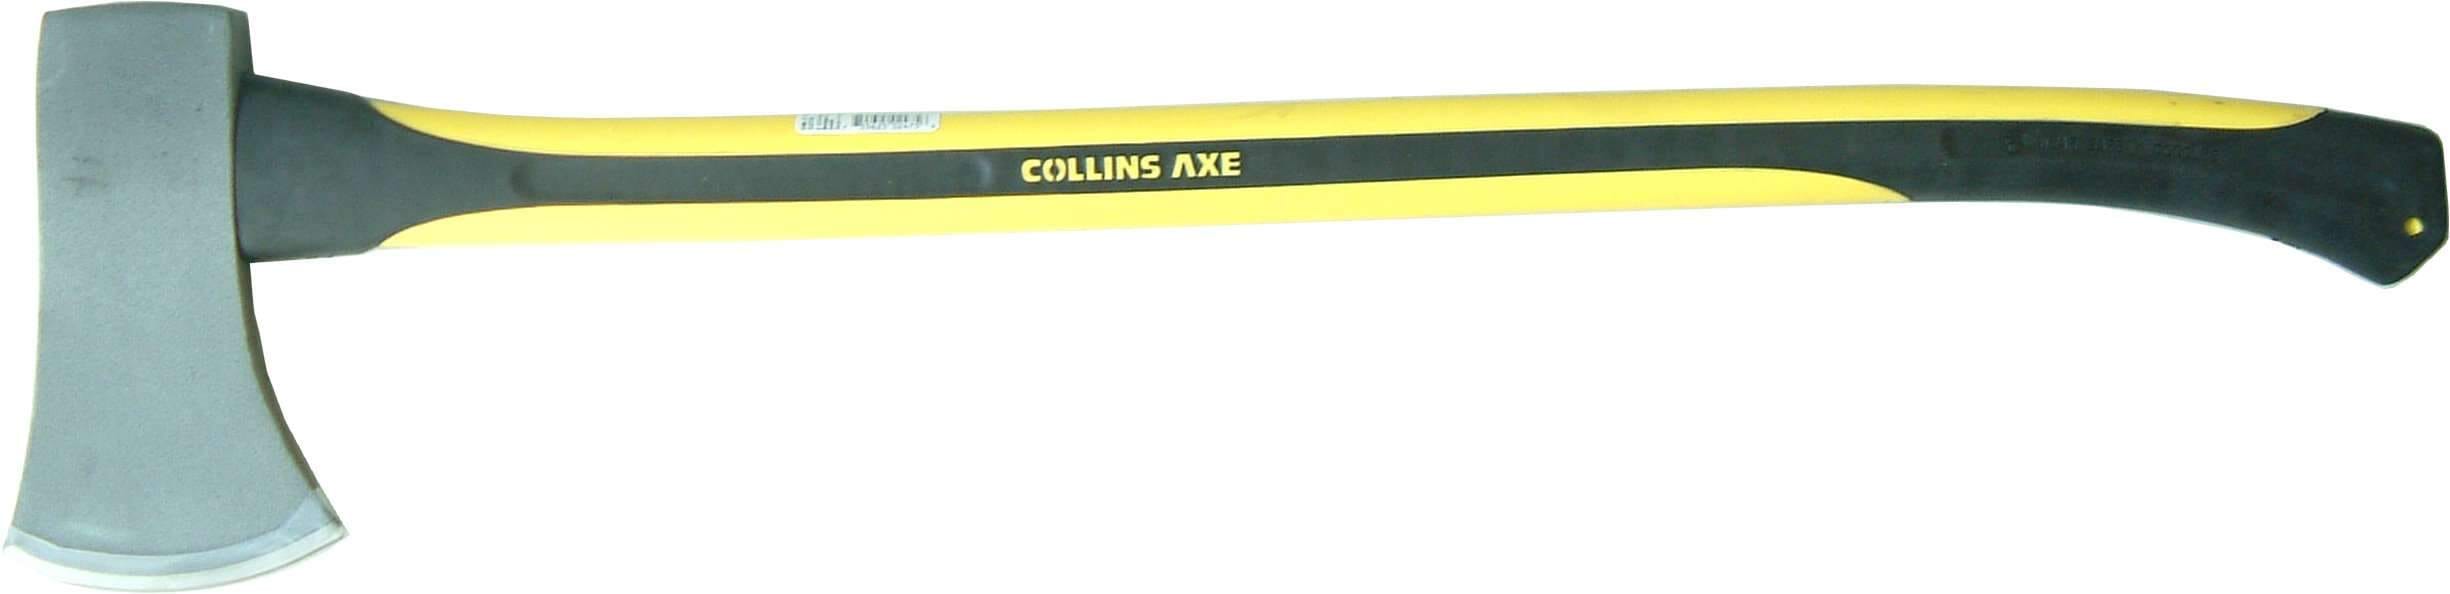 Collins Axe - Dayton Ptn with Fiberglass Handle 3-1/2lb